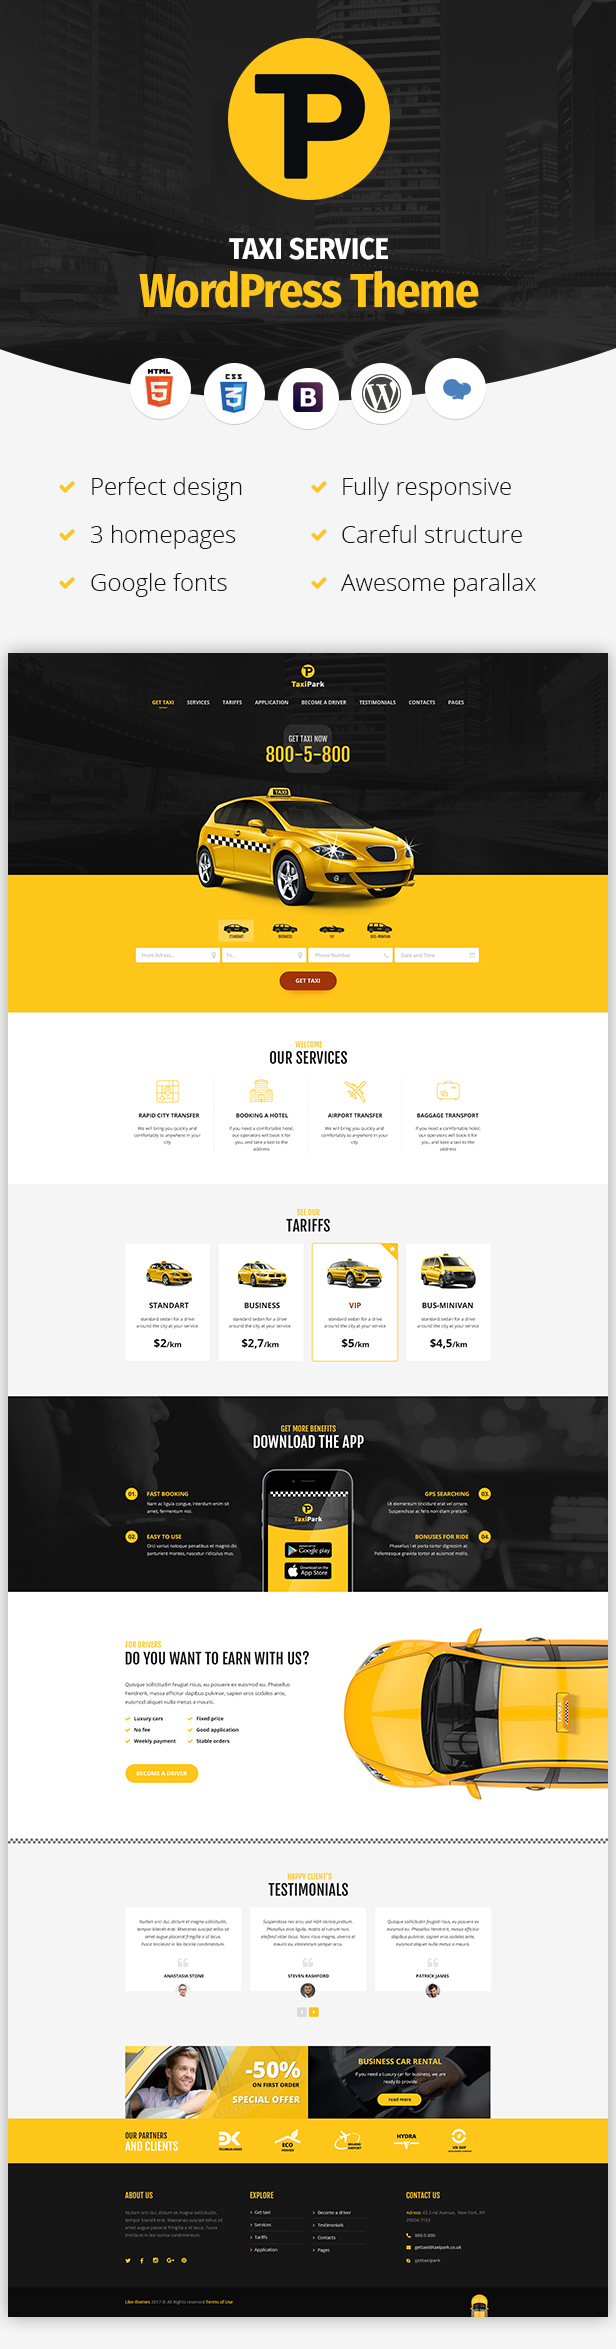 TaxiPark - Taxi Cab Service Company WordPress Theme - 4